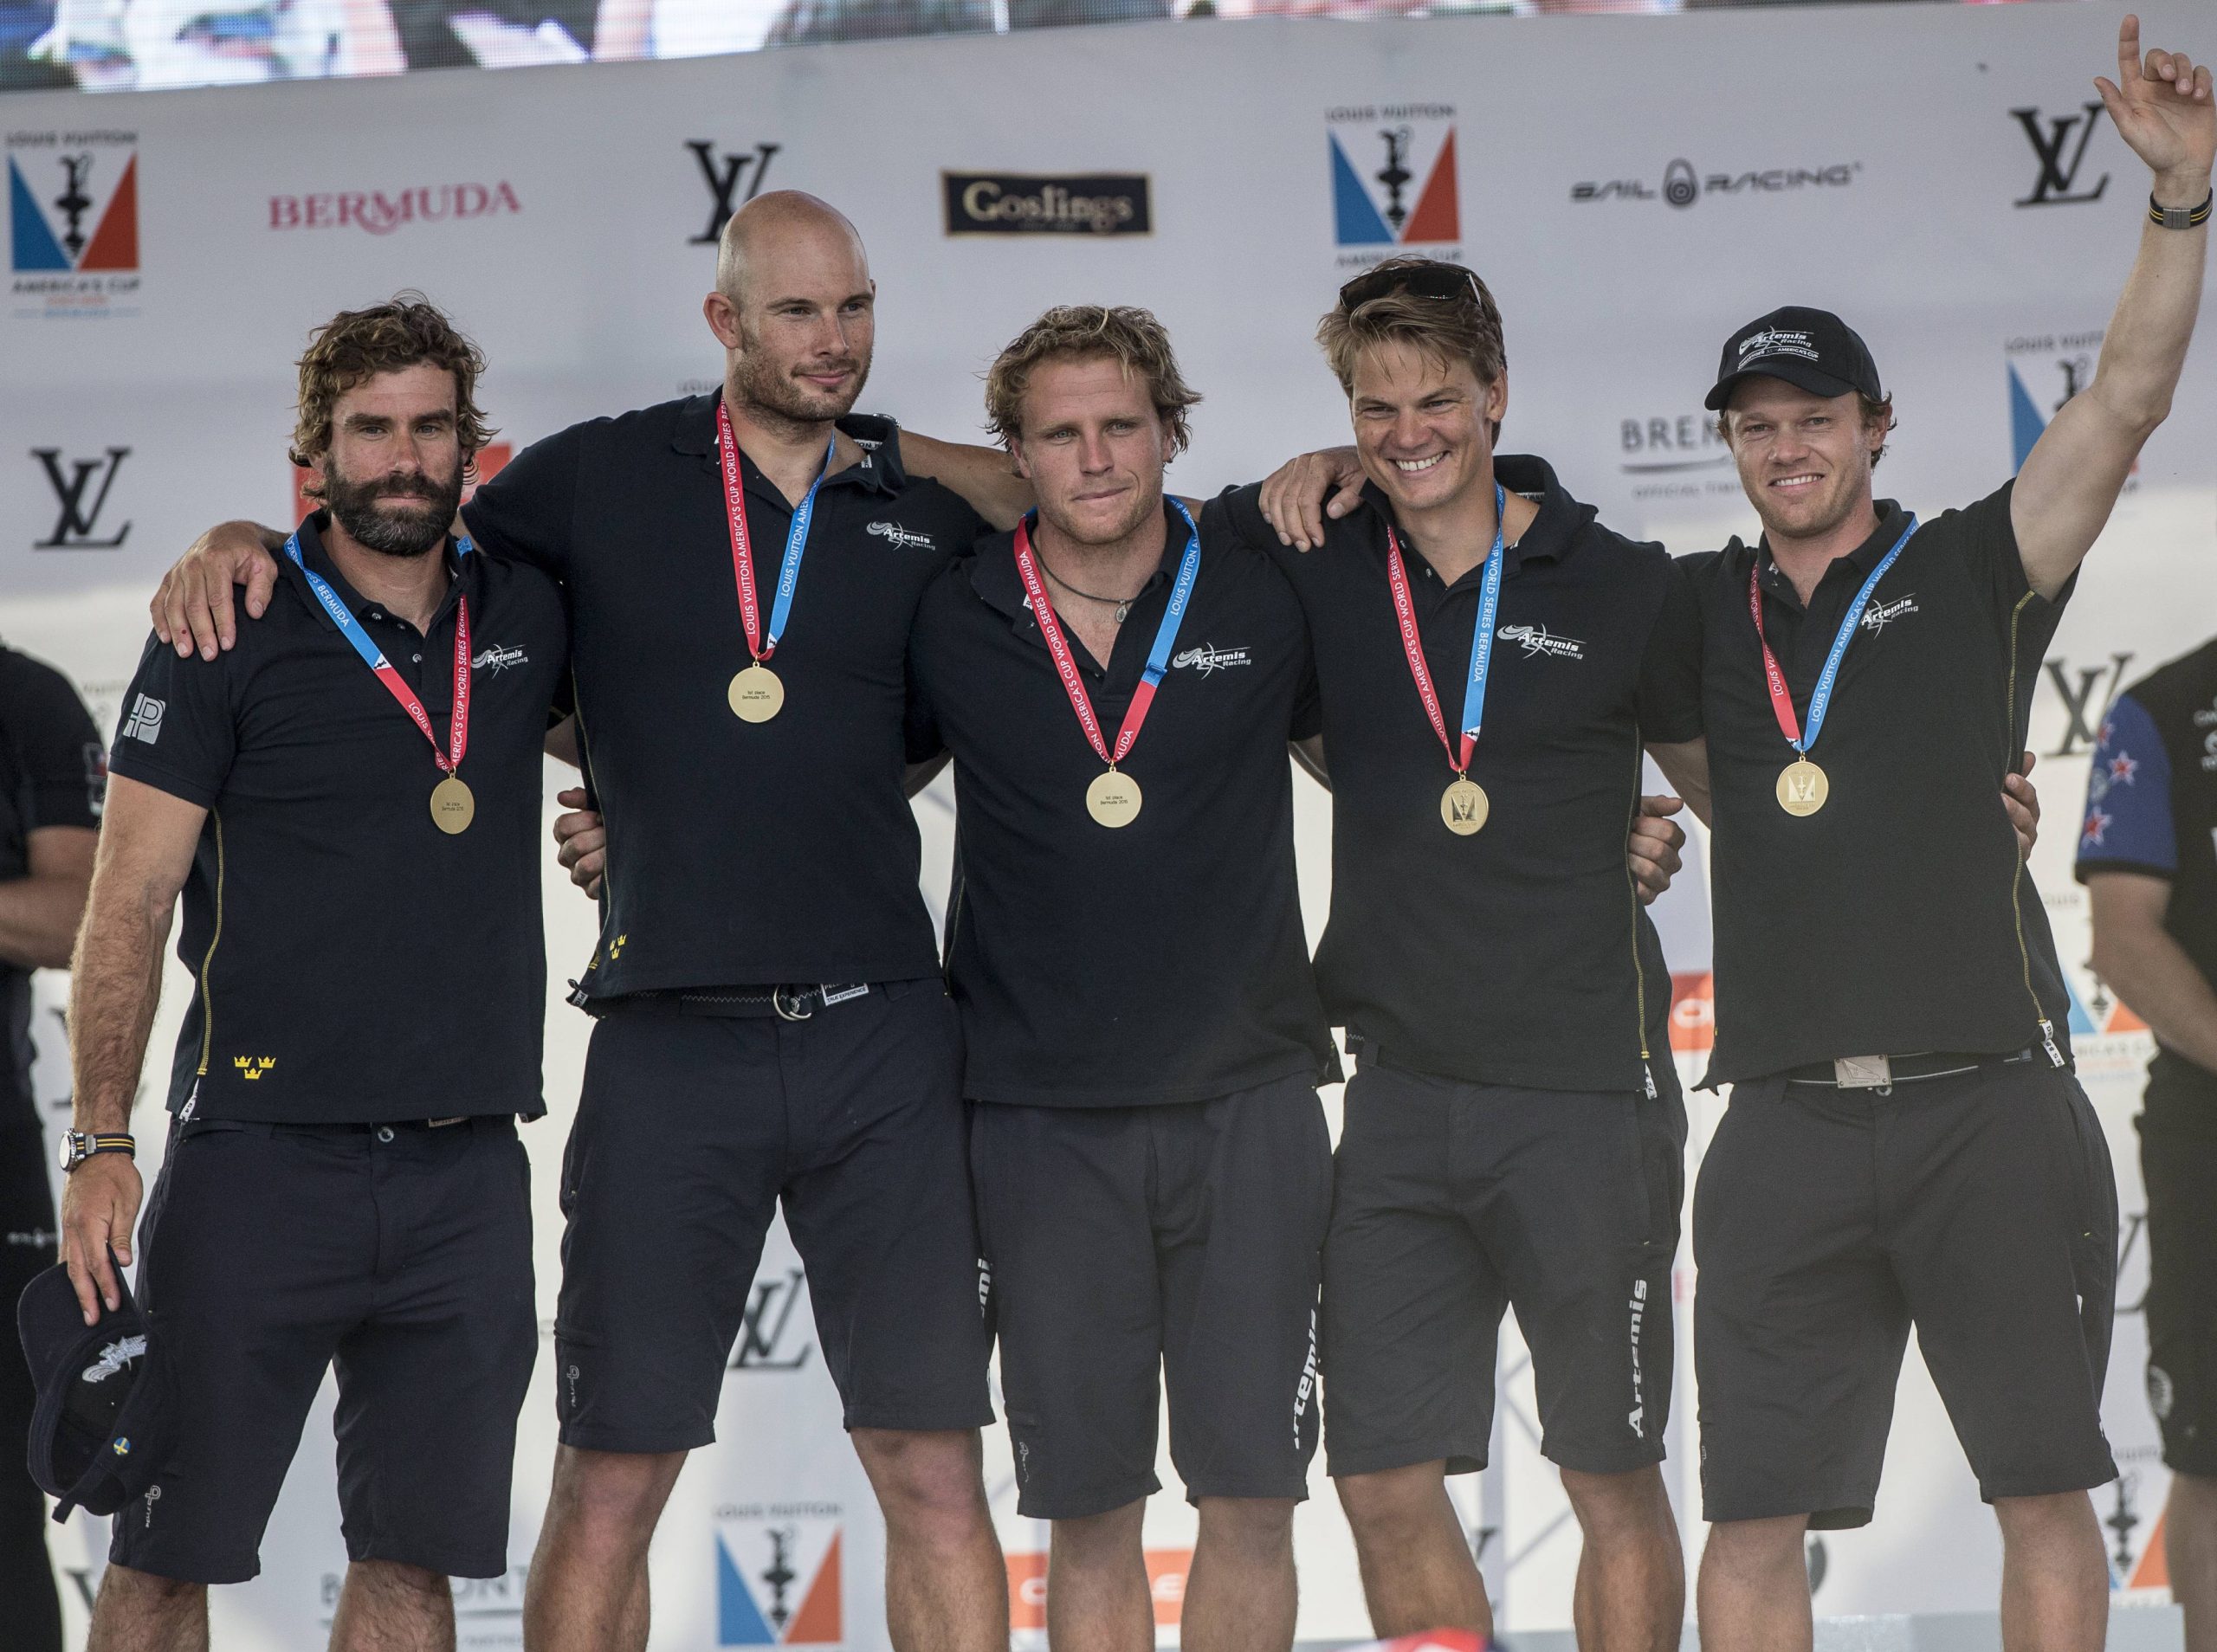 Artemis Racing Wins Louis Vuitton America’s Cup Event In Bermuda